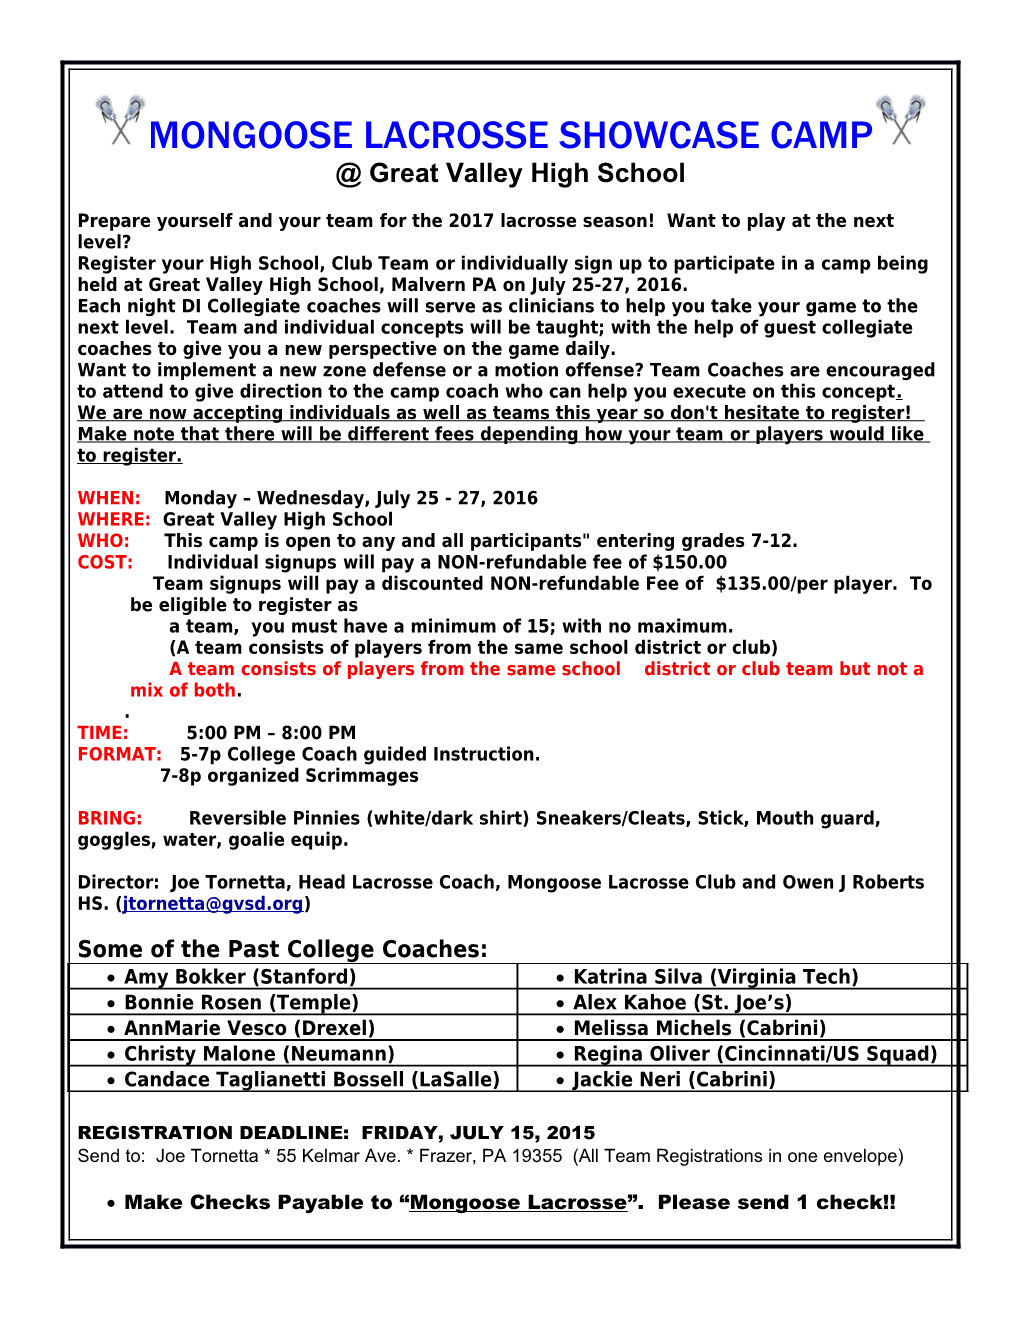 Great Valley High School